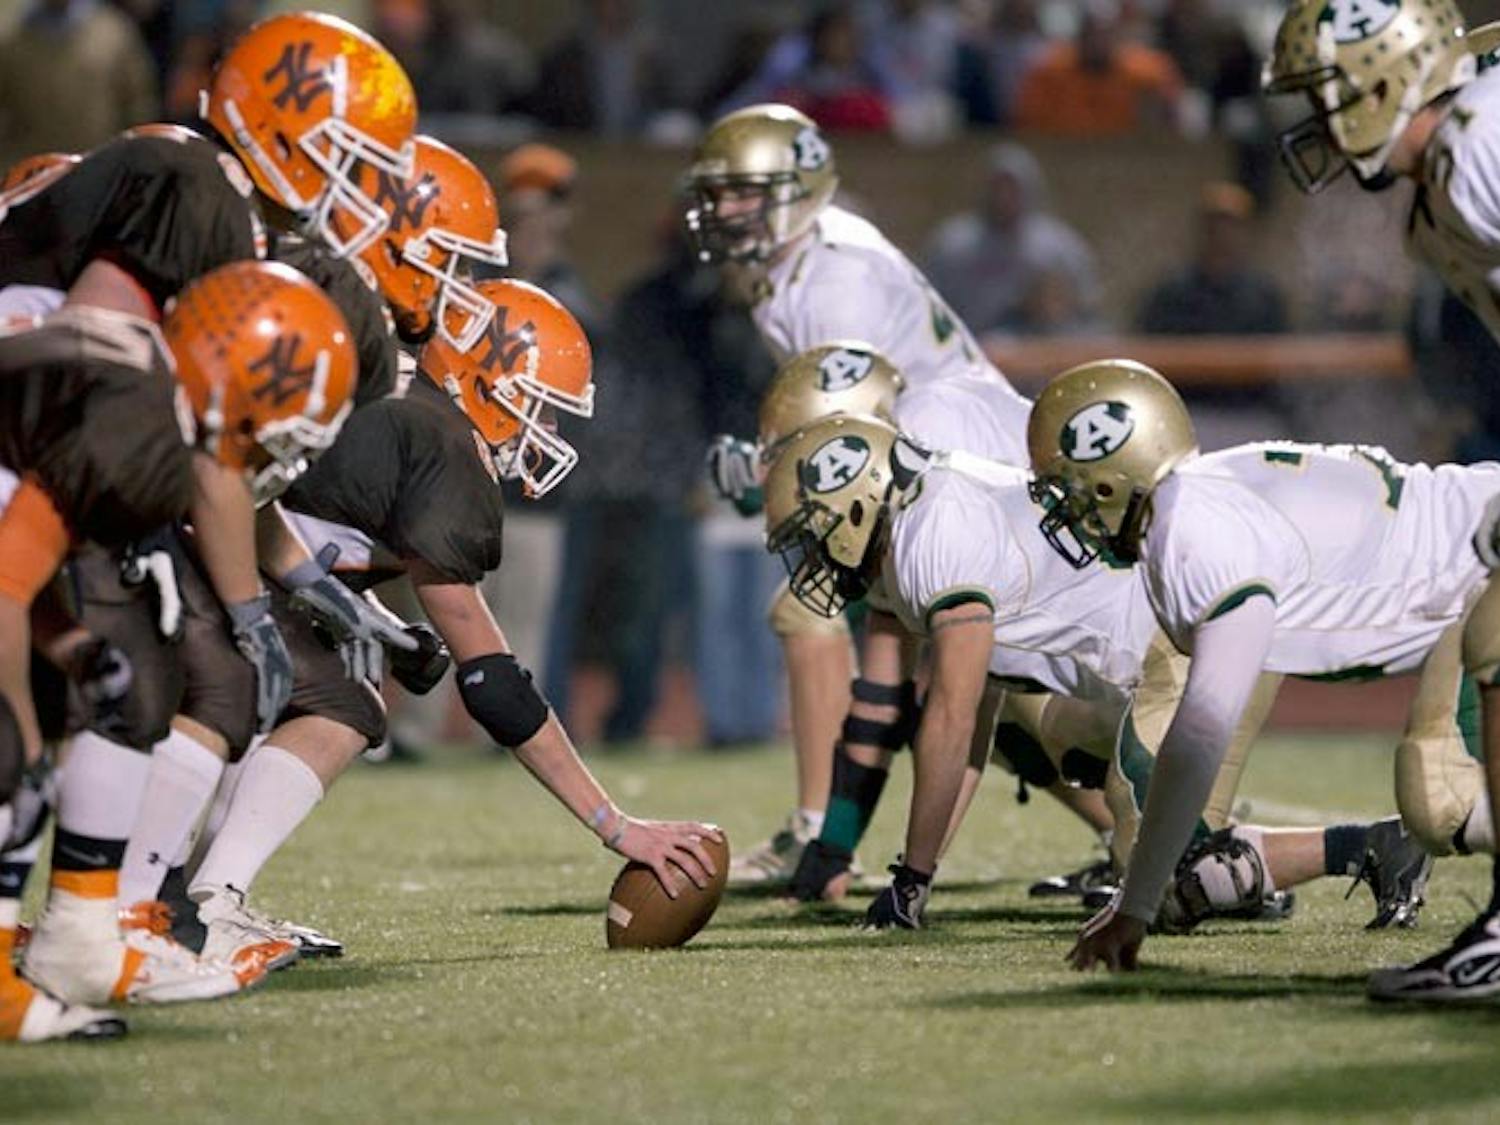 High School Football: Unbeaten teams eye perfection during season's signature contest  